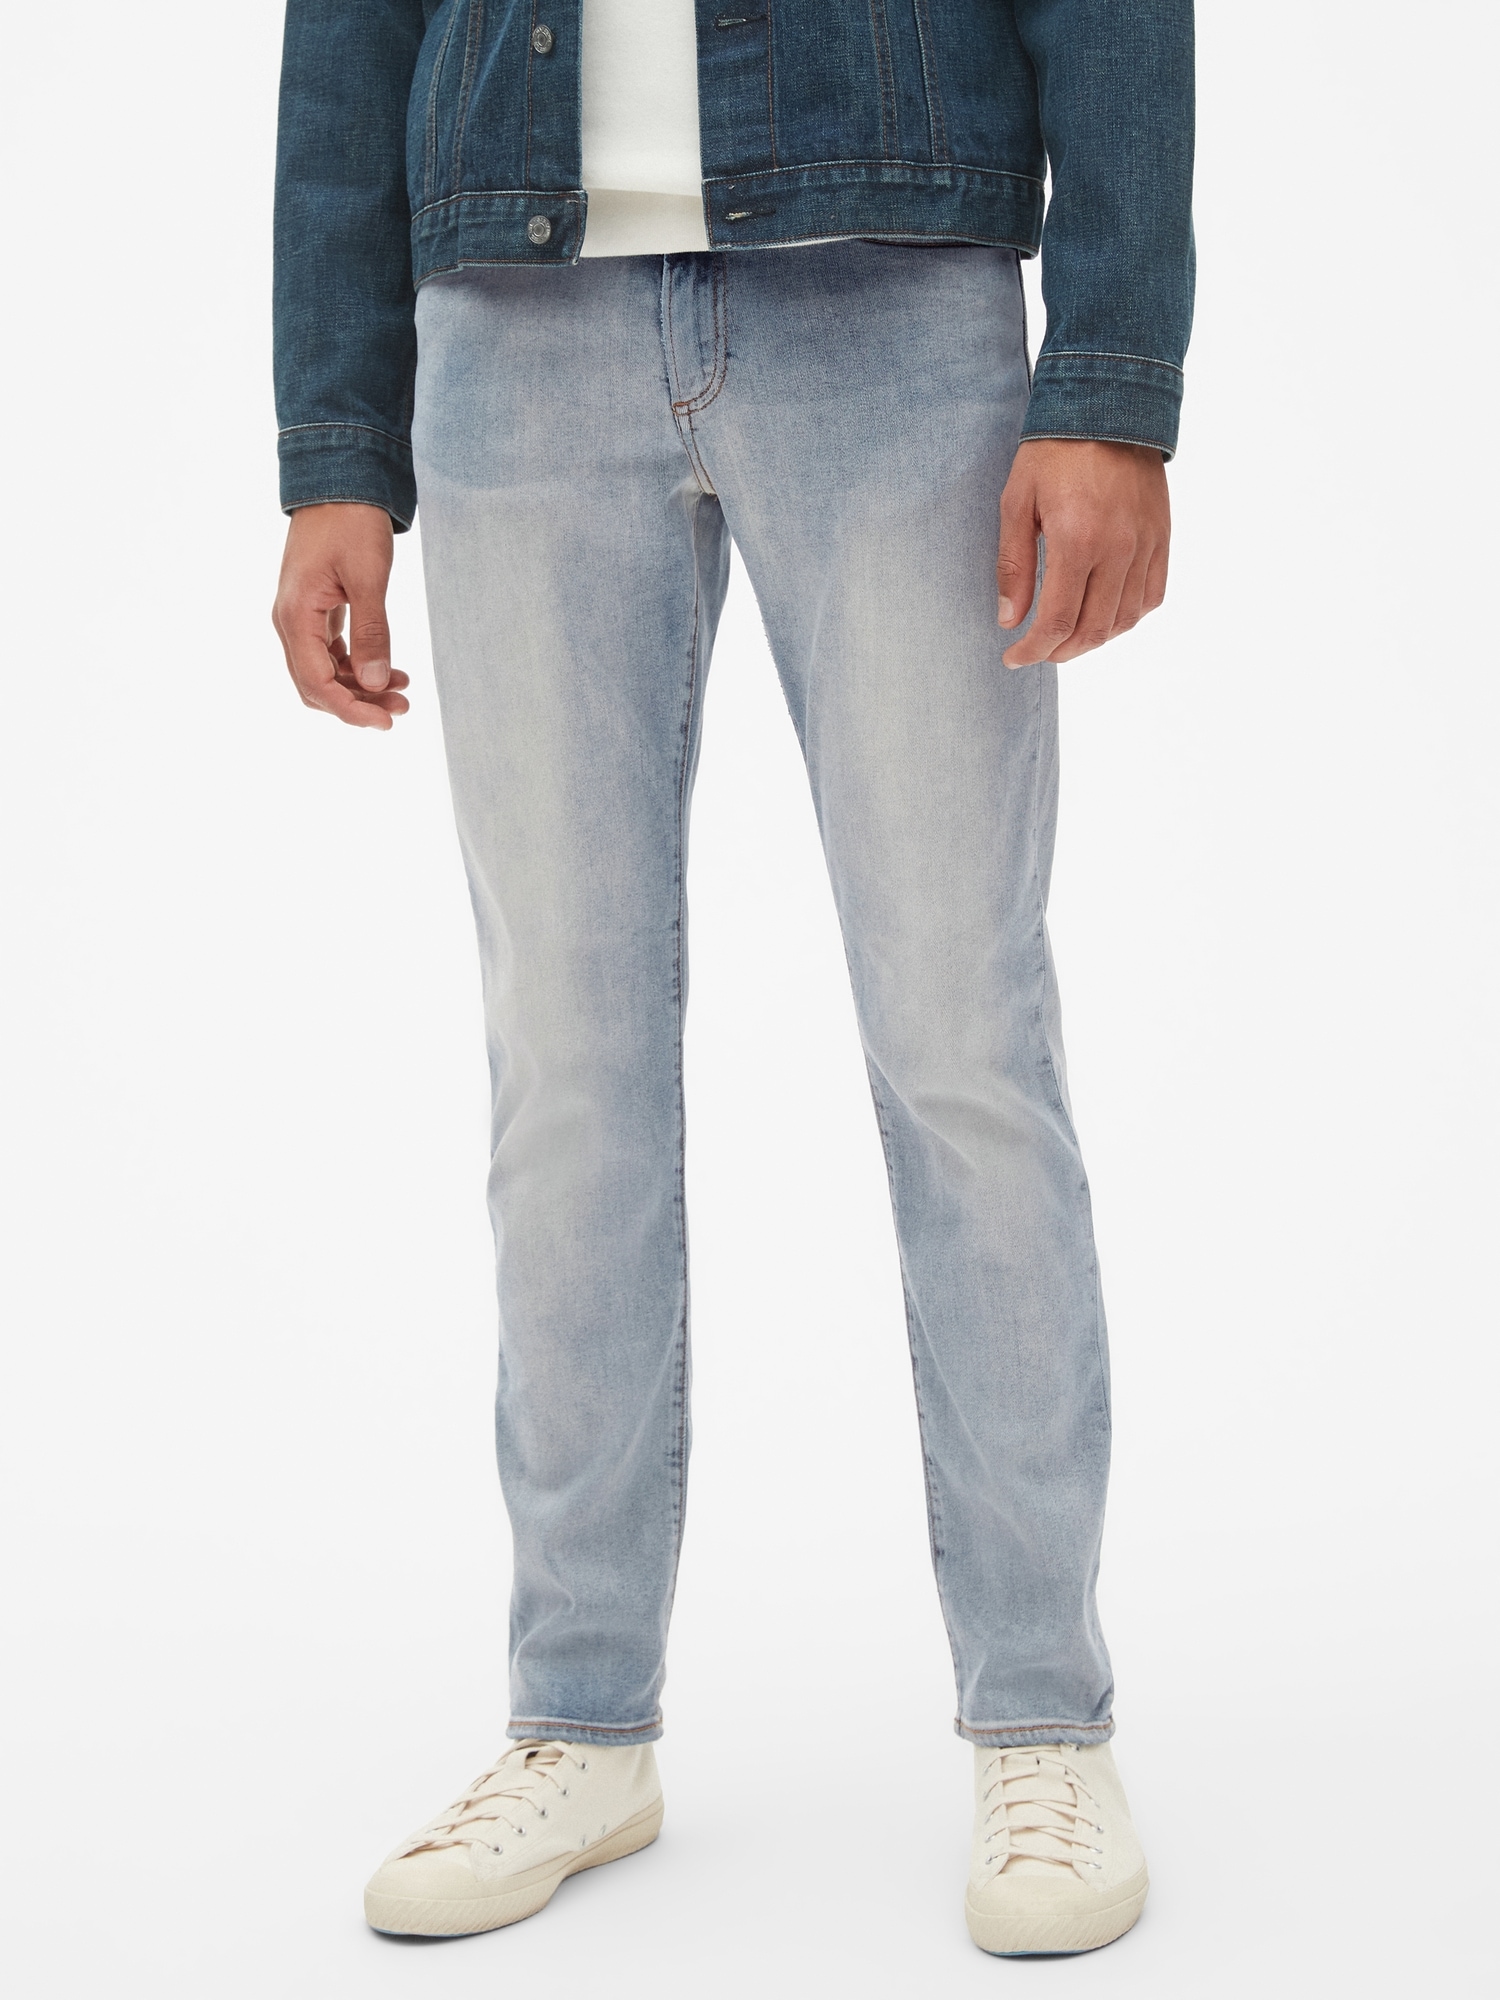 GAP Men's Gapflex Stretch Technology Slim Fit Denim Jeans - Clothing Review  